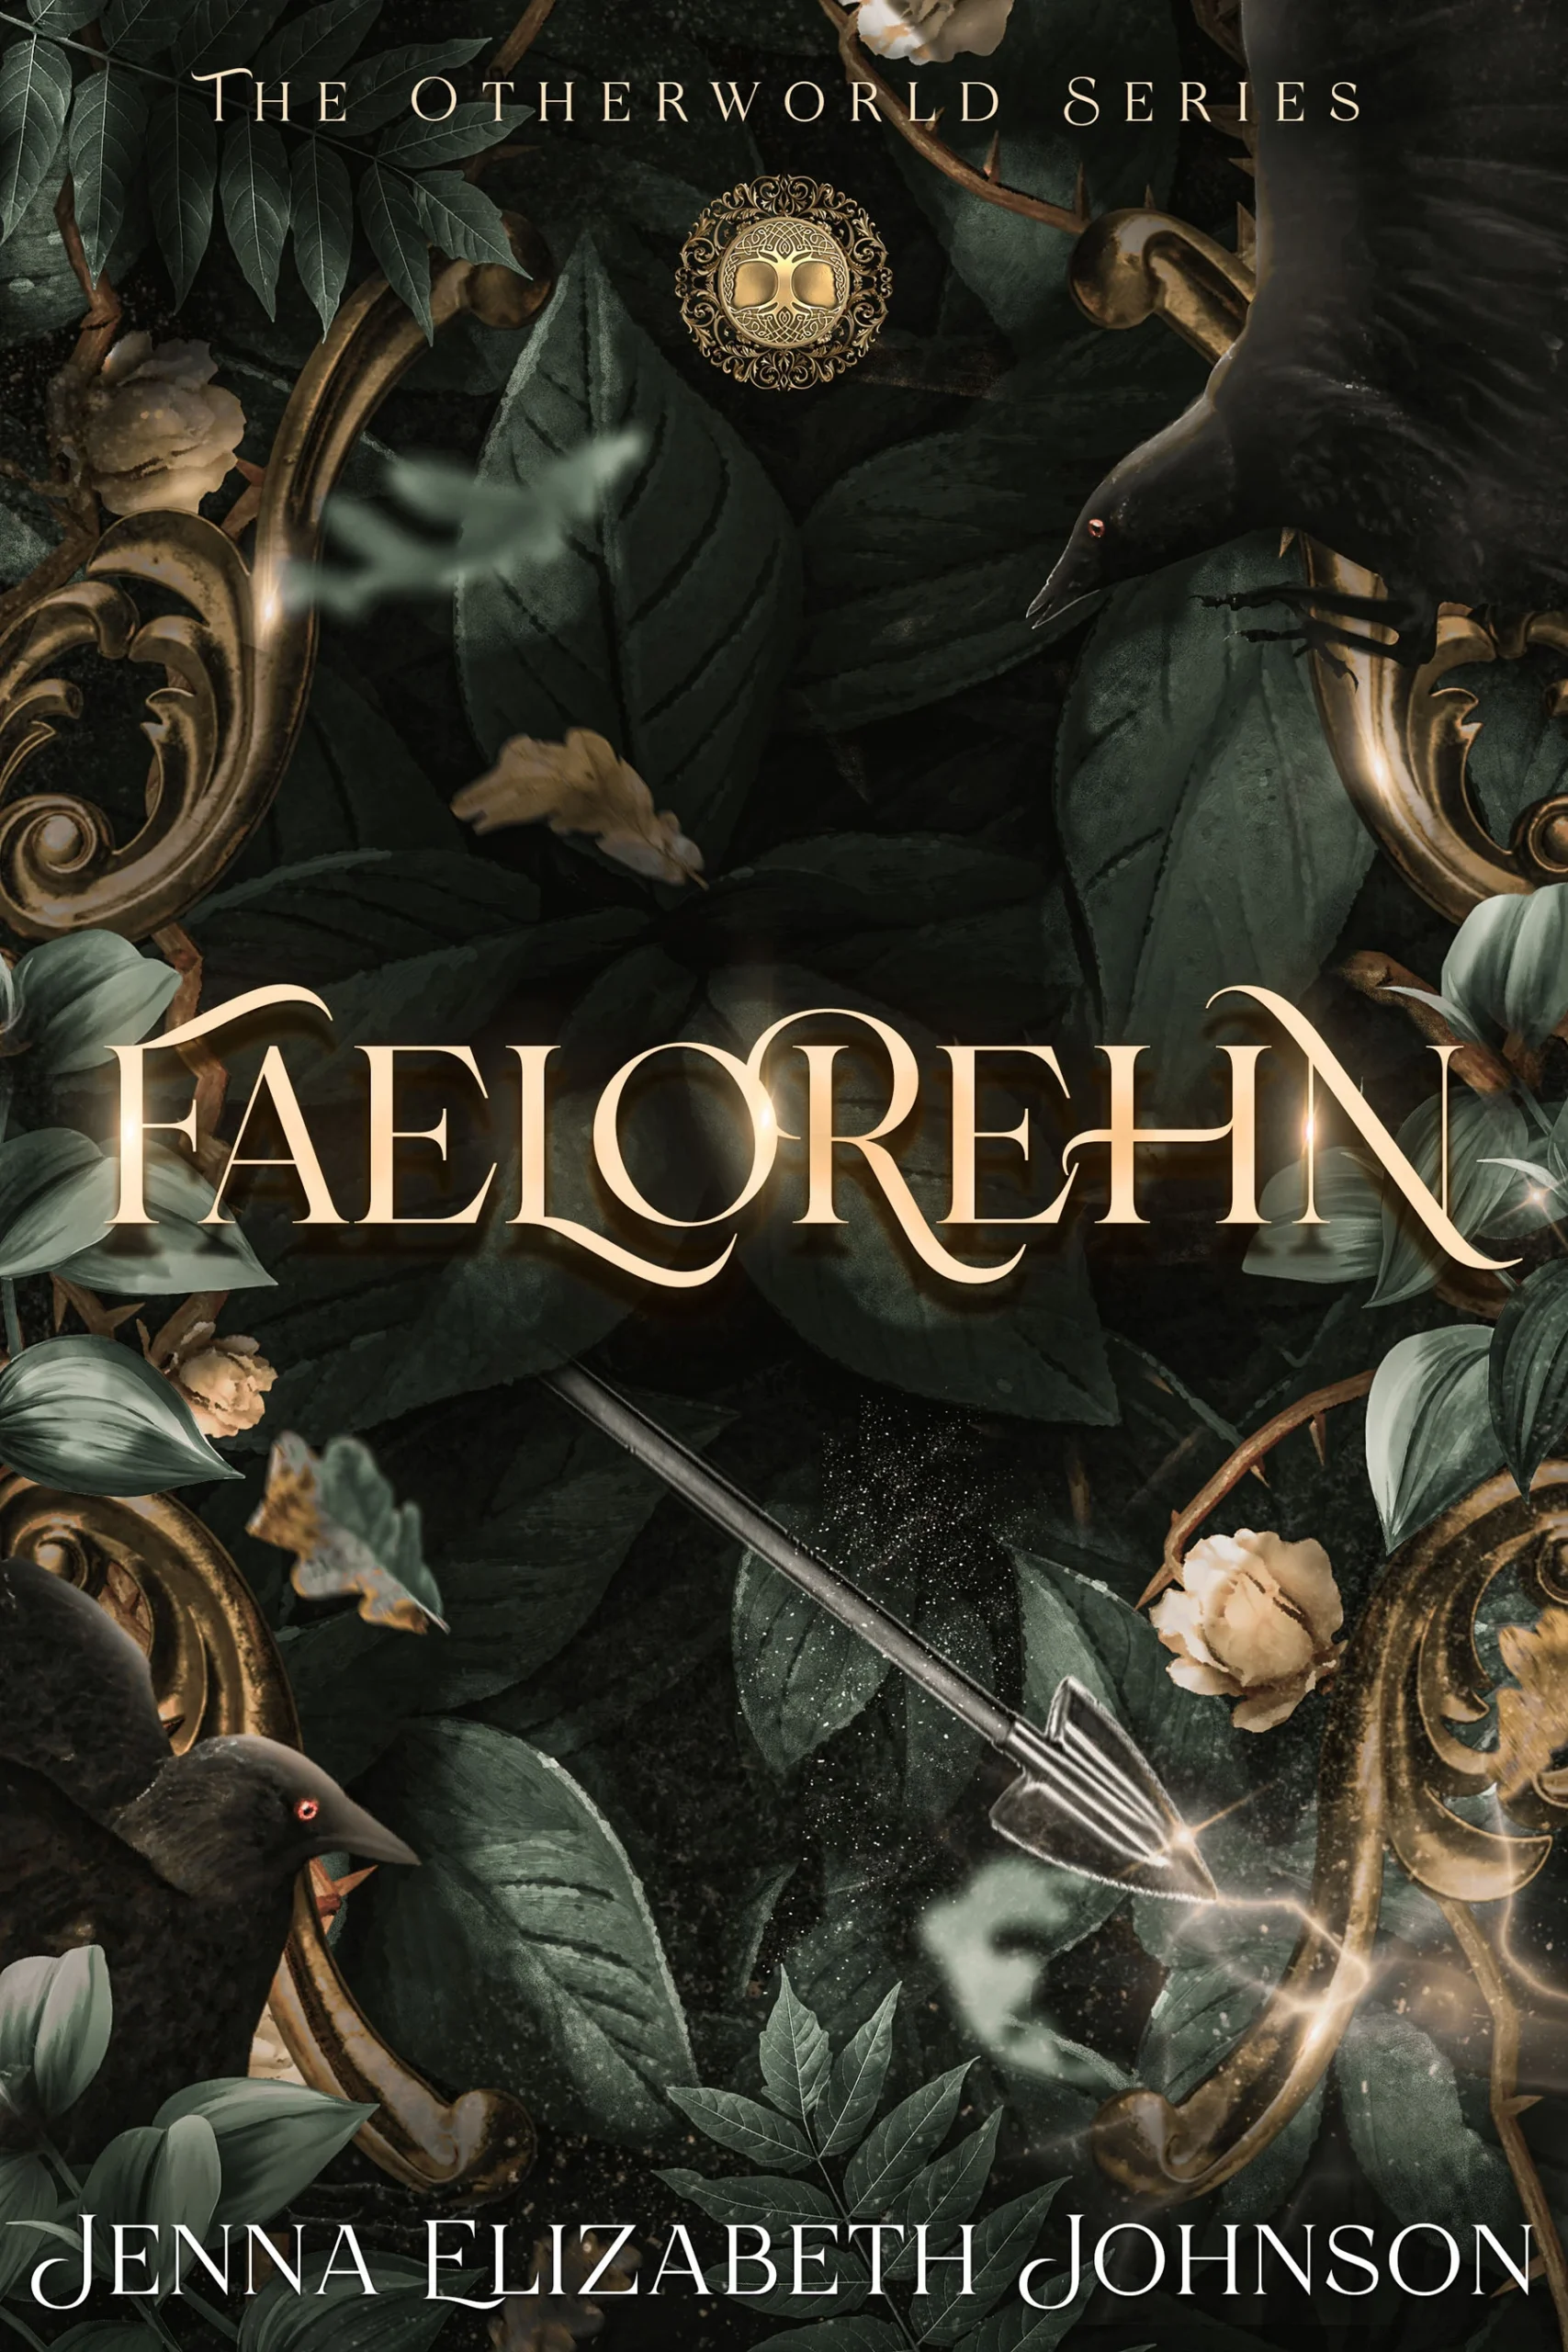 Faelorehn: A Young Adult Dark Fae Romance Novel (The Otherworld Series Book 1)